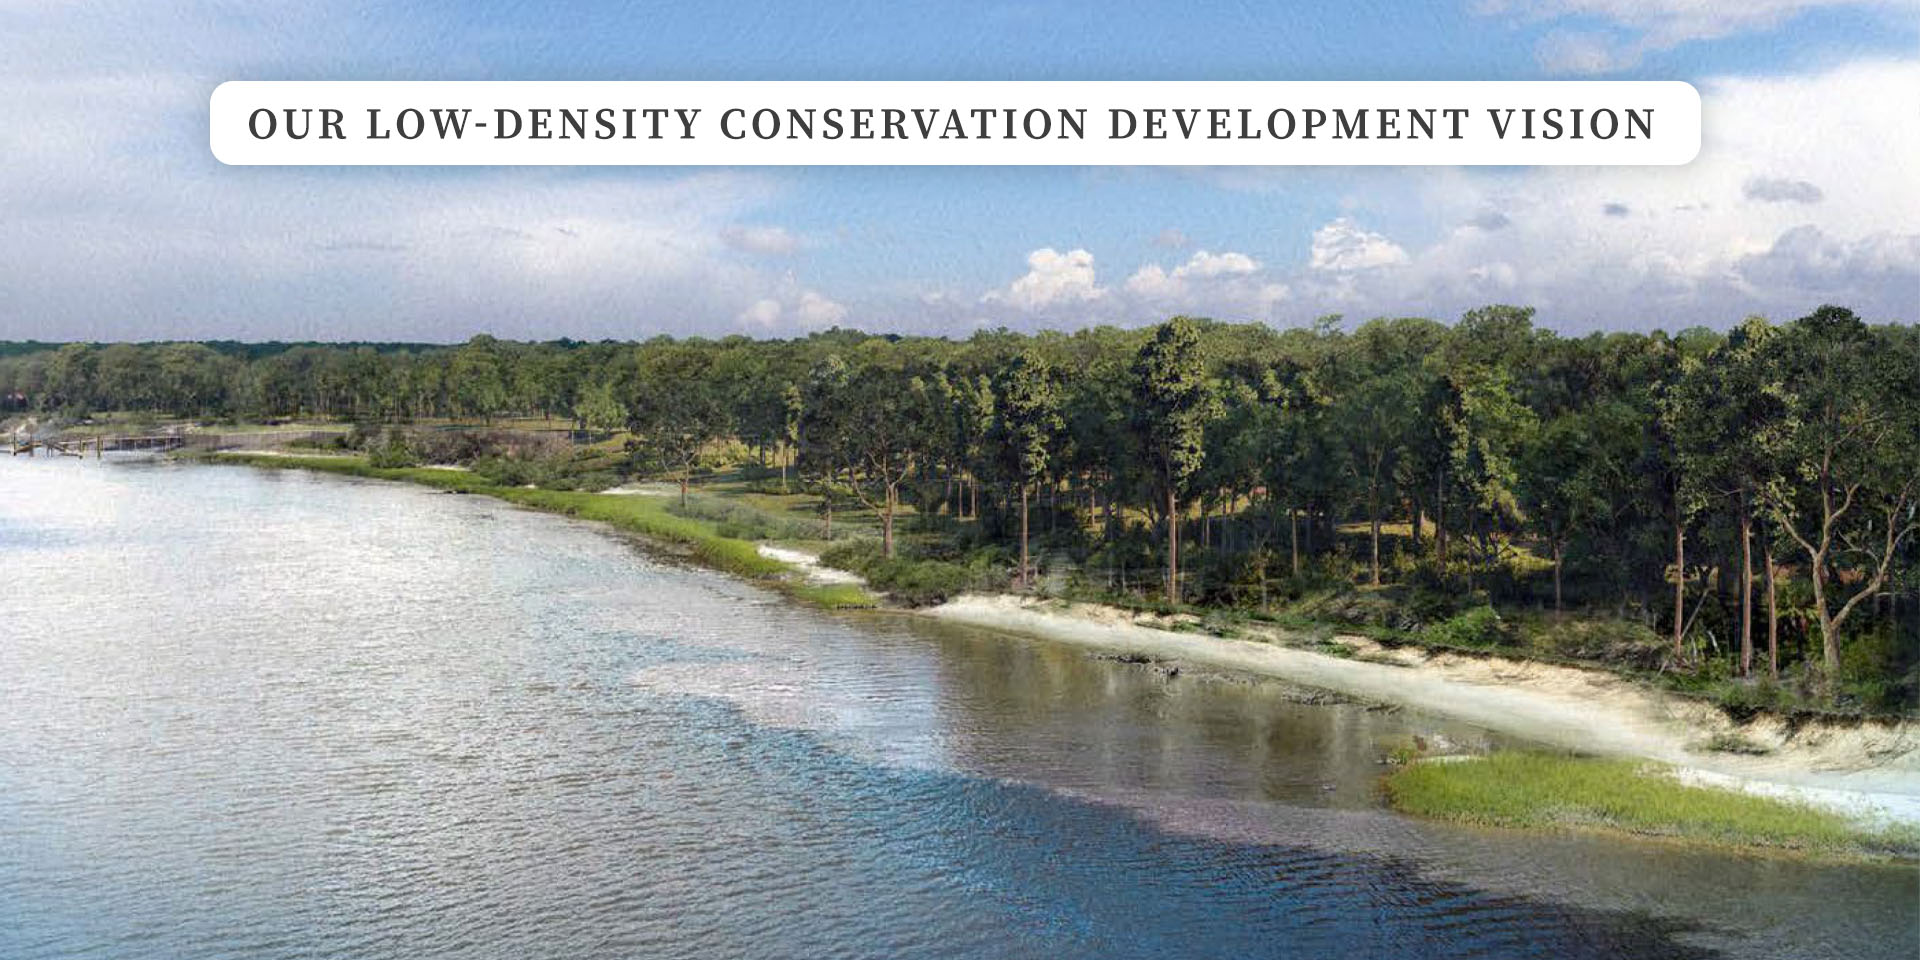 Along Morgan River: Our Low-Density Conservation Development Vision